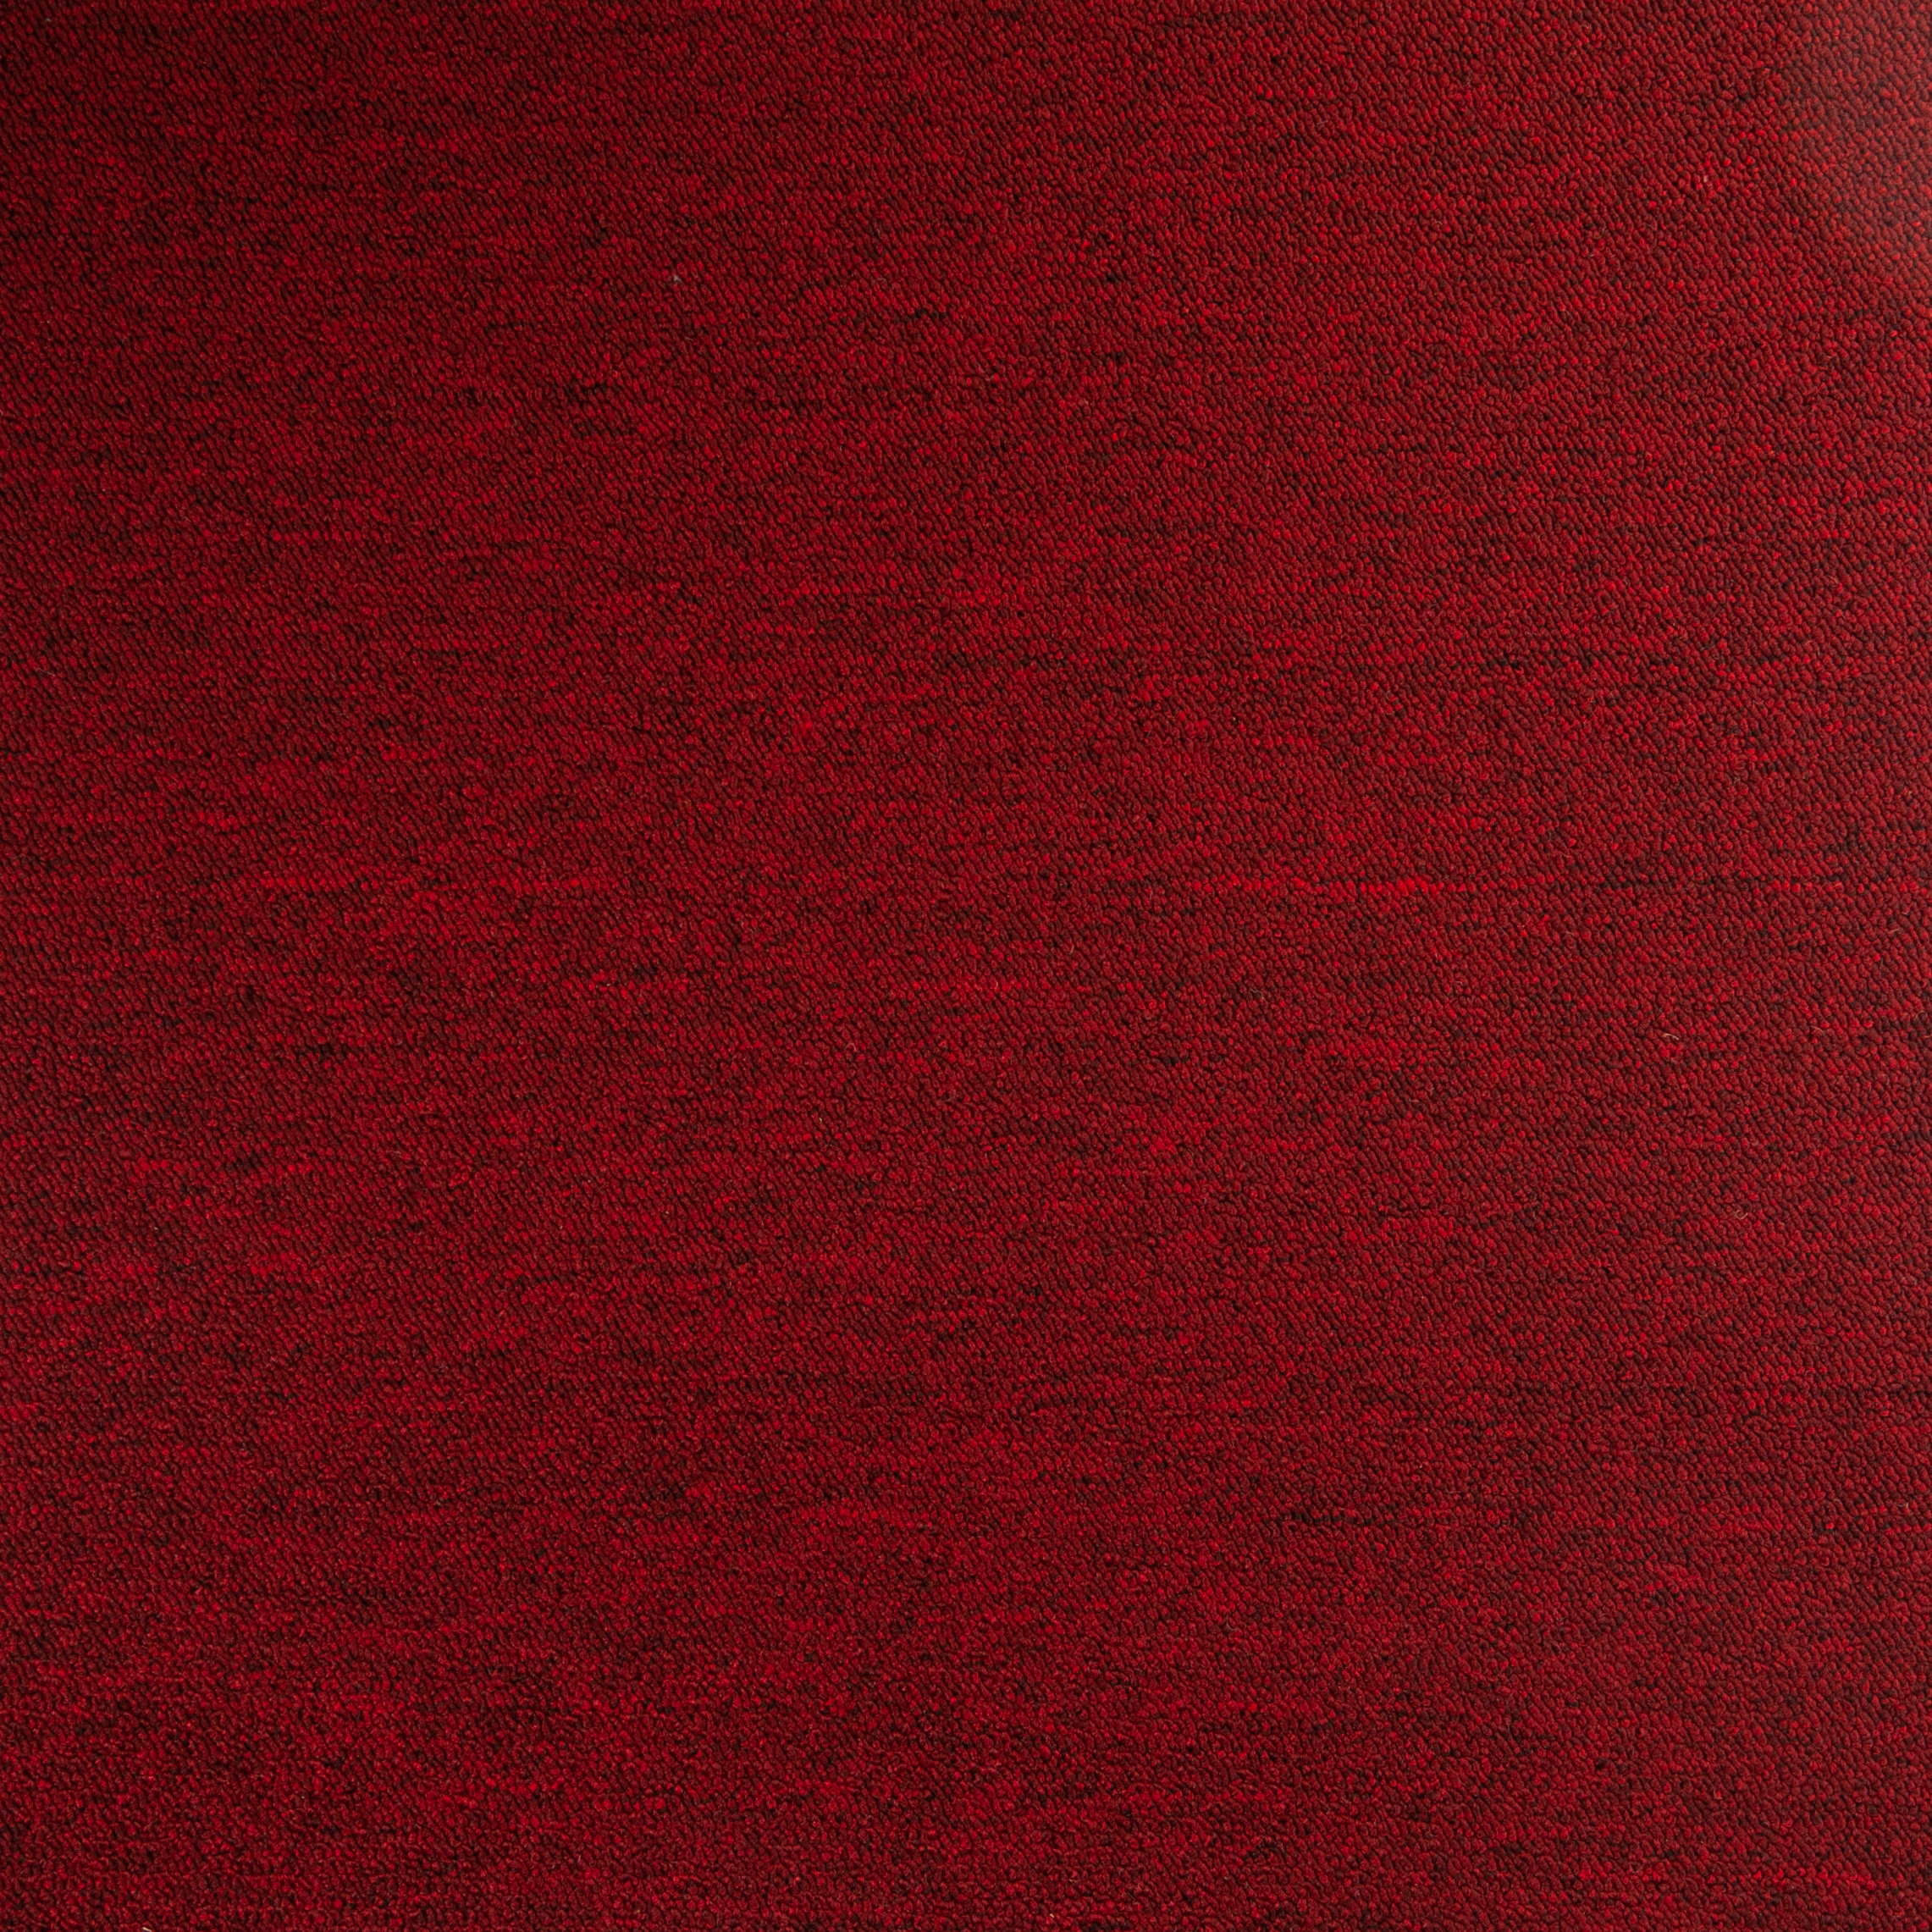 Vinyl Luxury Carpet Tiles With Padding